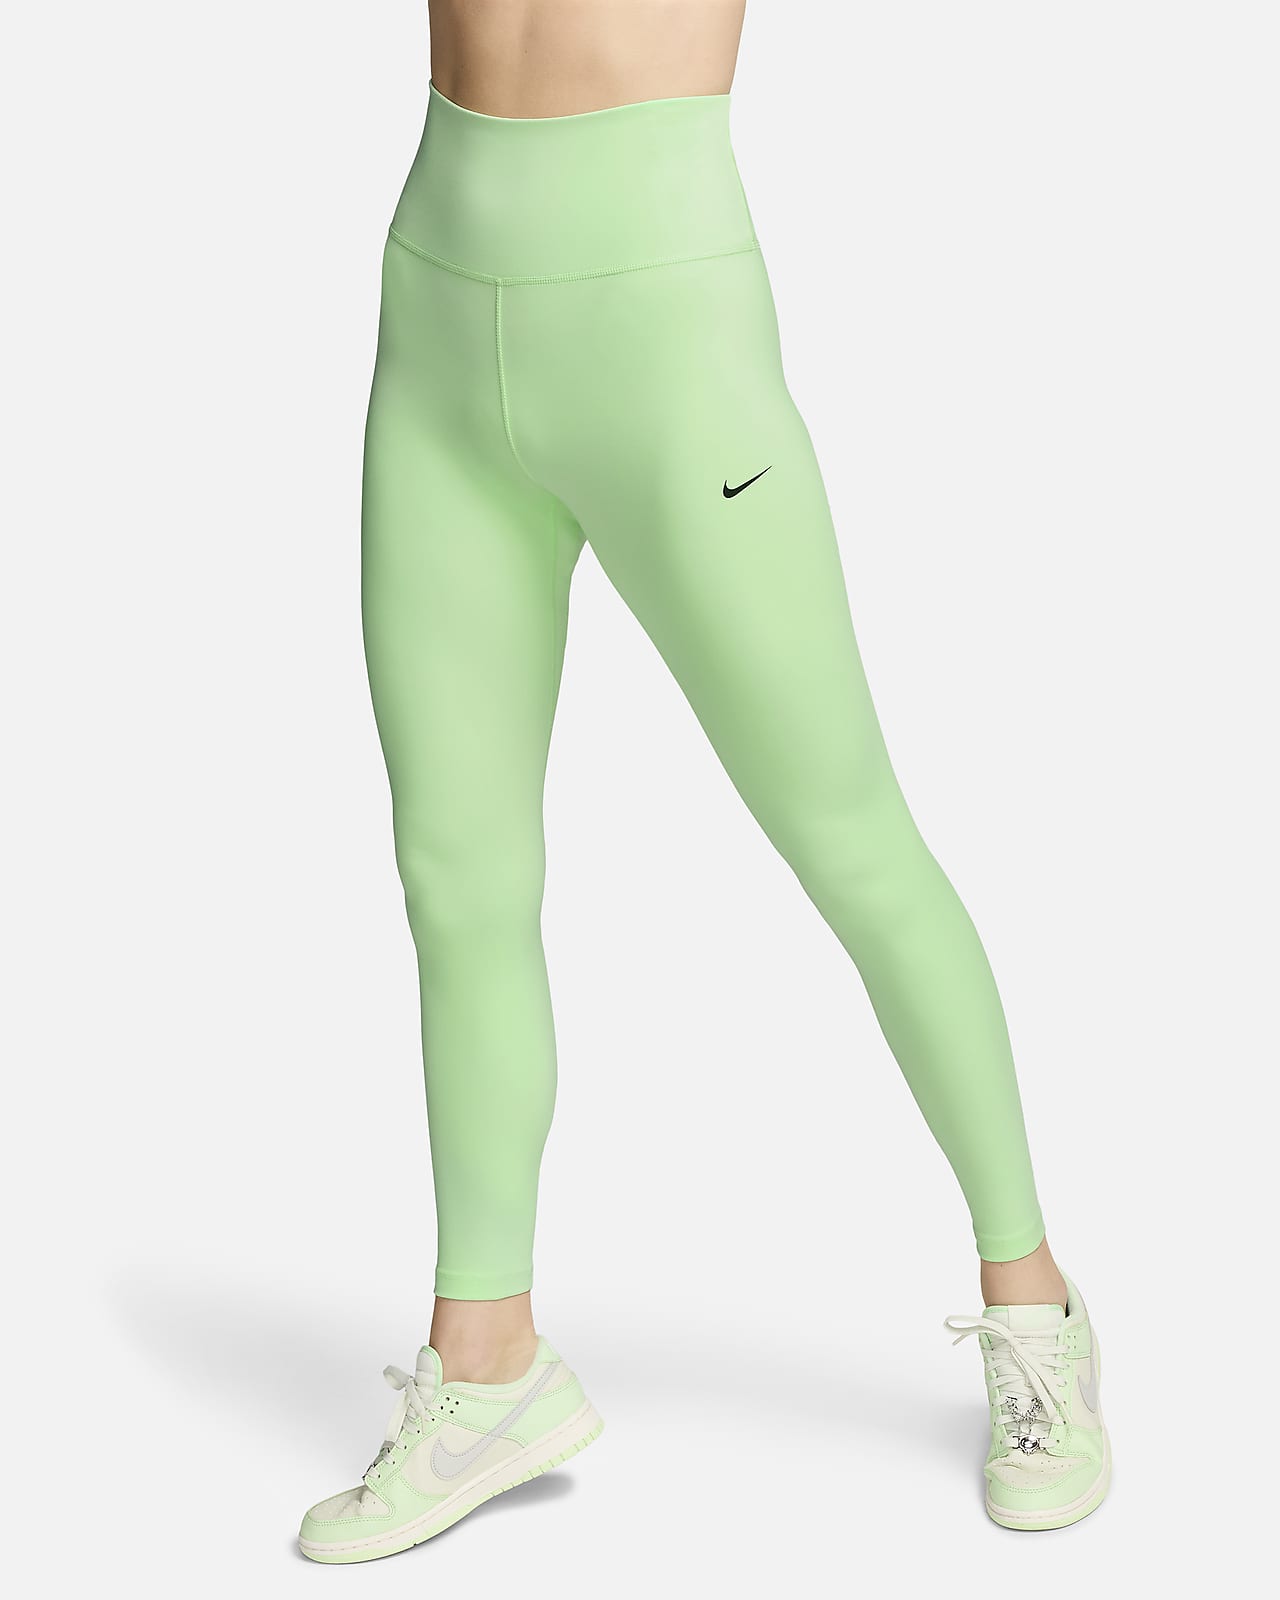 Leggings de cintura subida a todo o comprimento Nike One para mulher